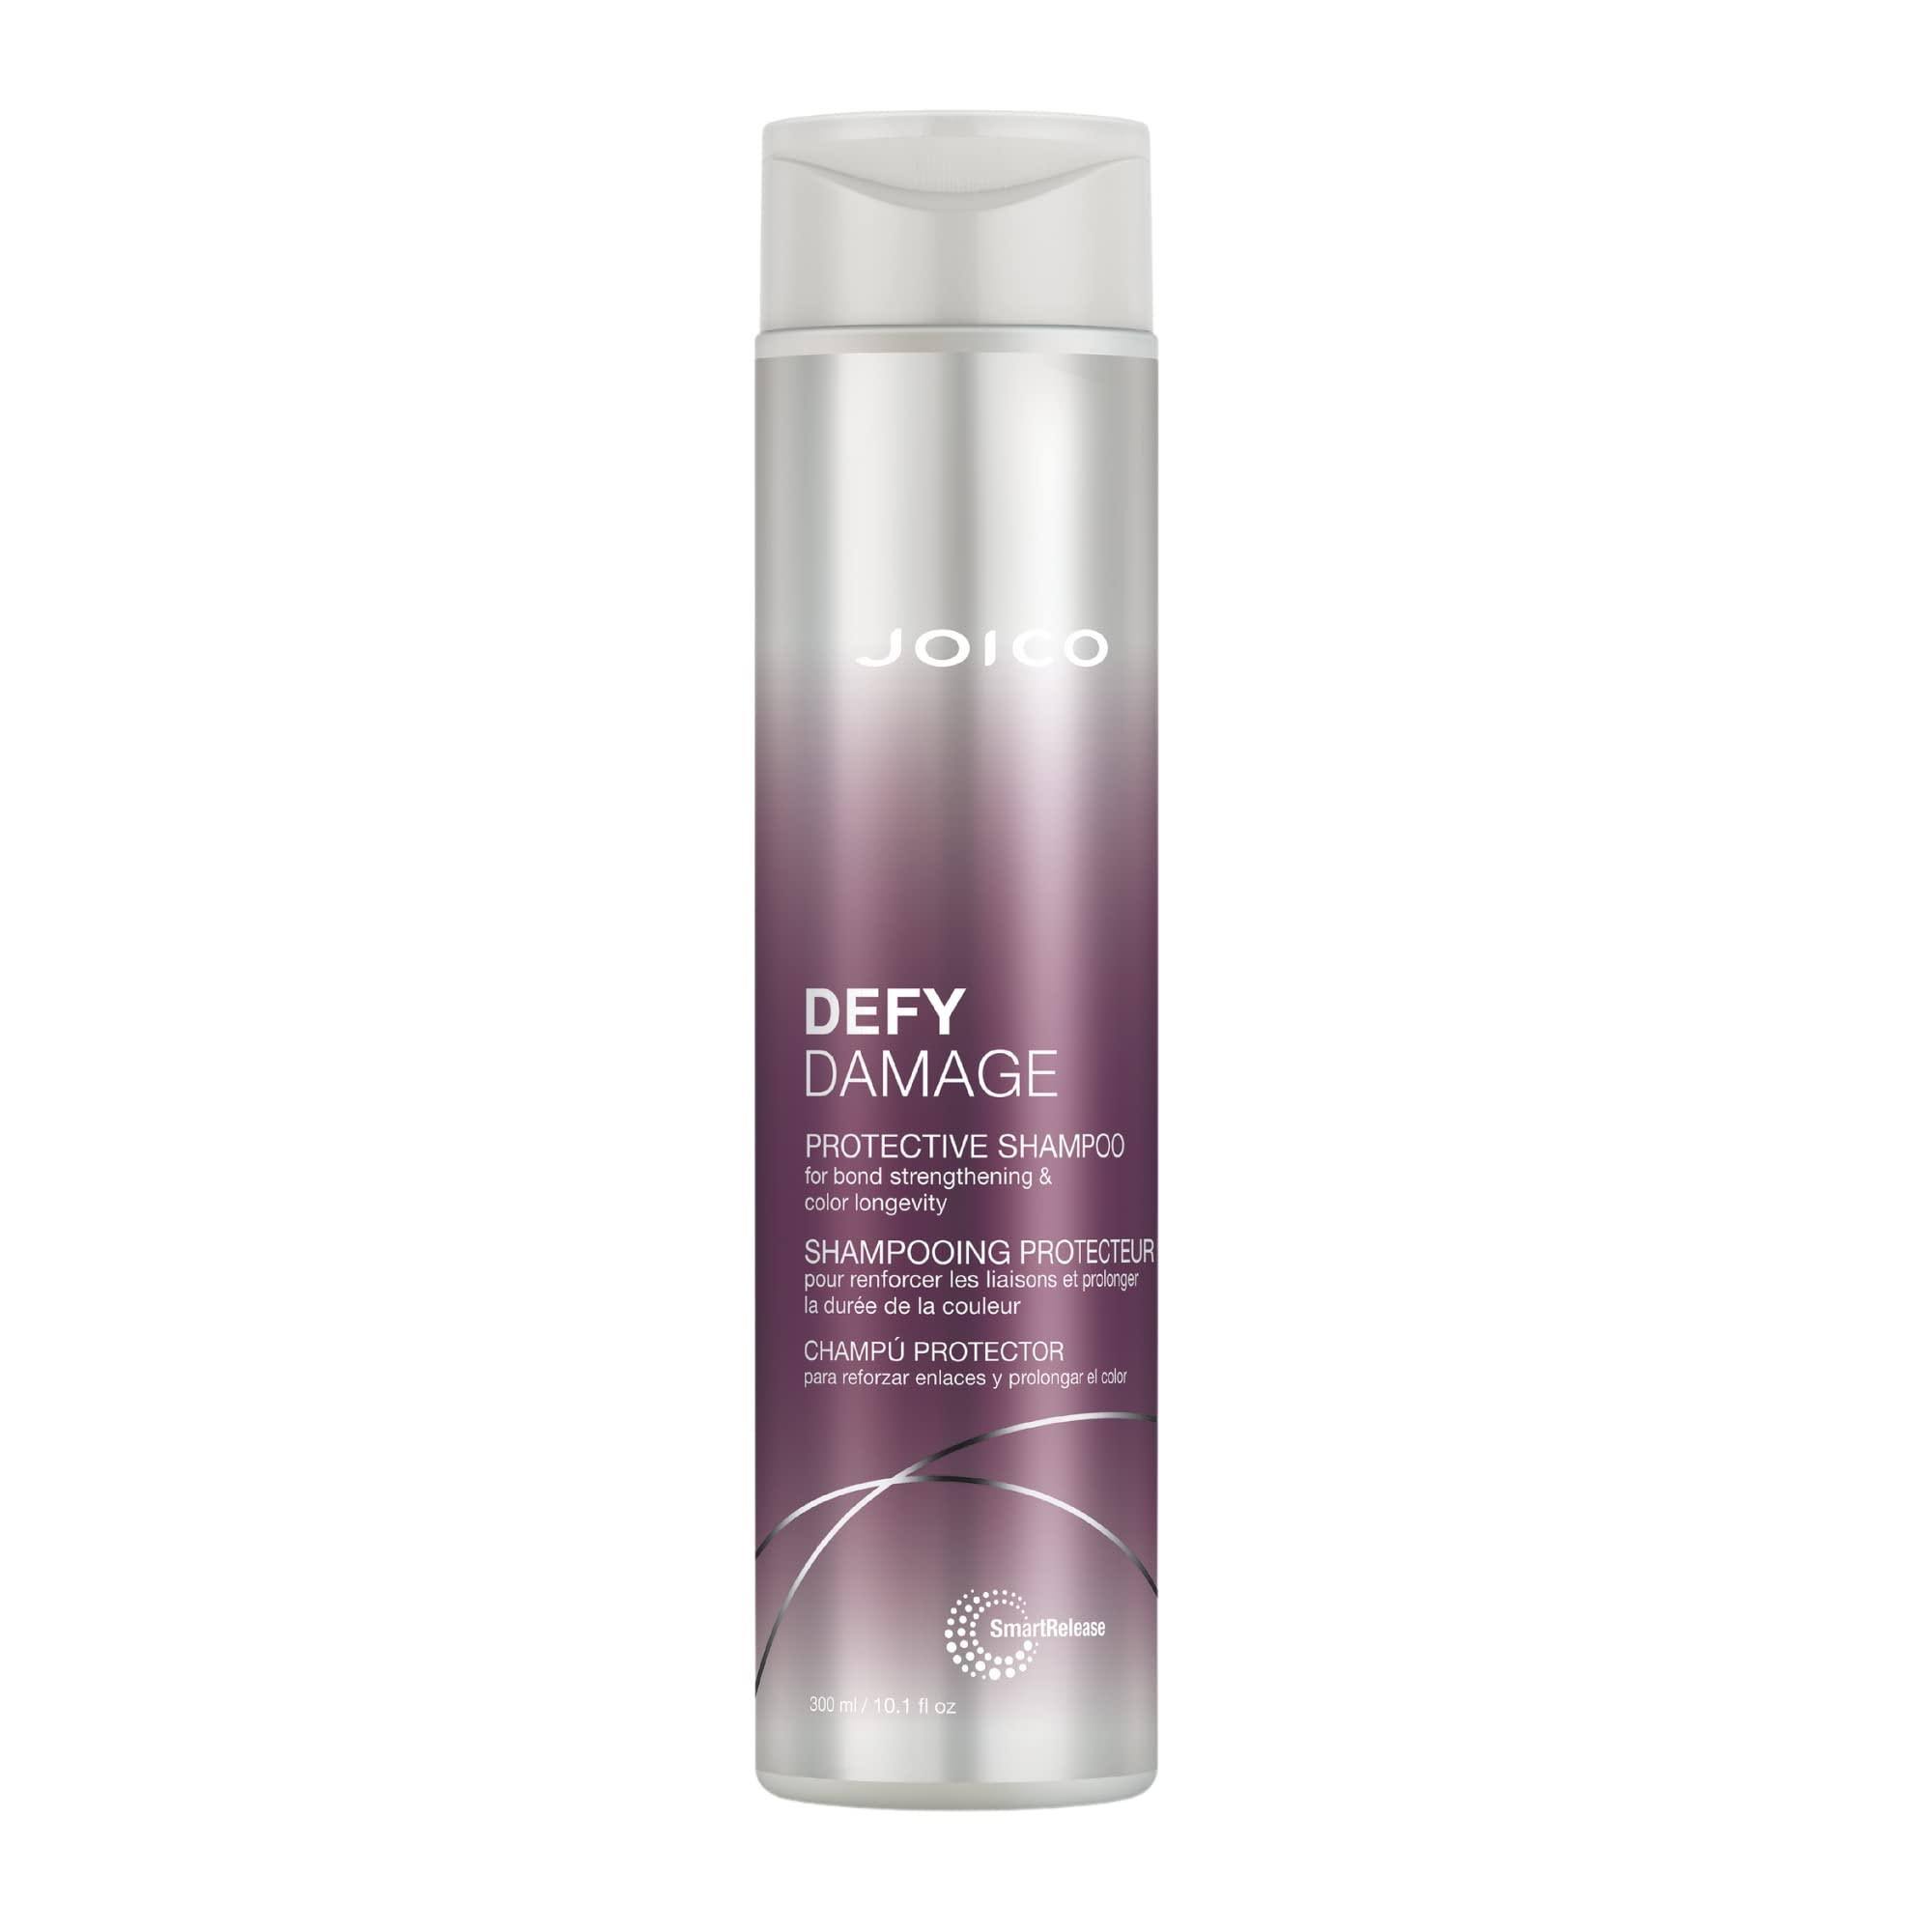 Joico Defy Damage Protective Shampoo - 10.1oz